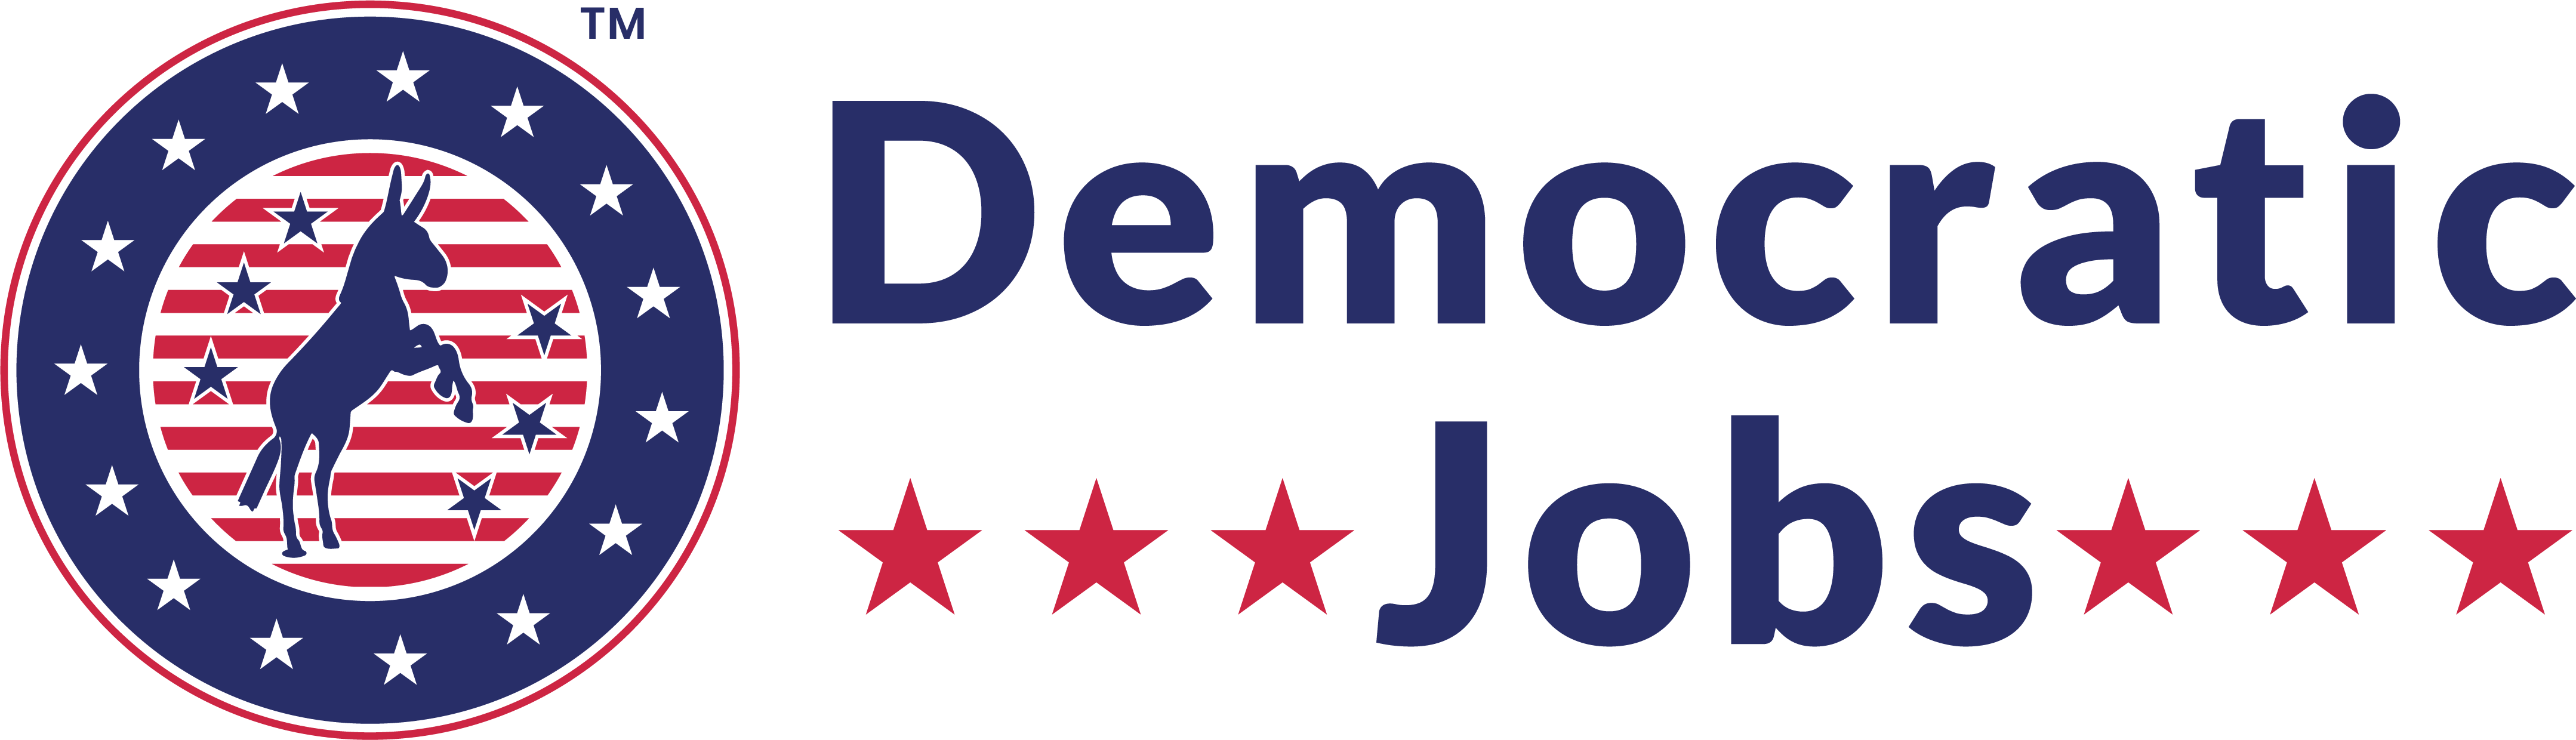 democratic governance jobs